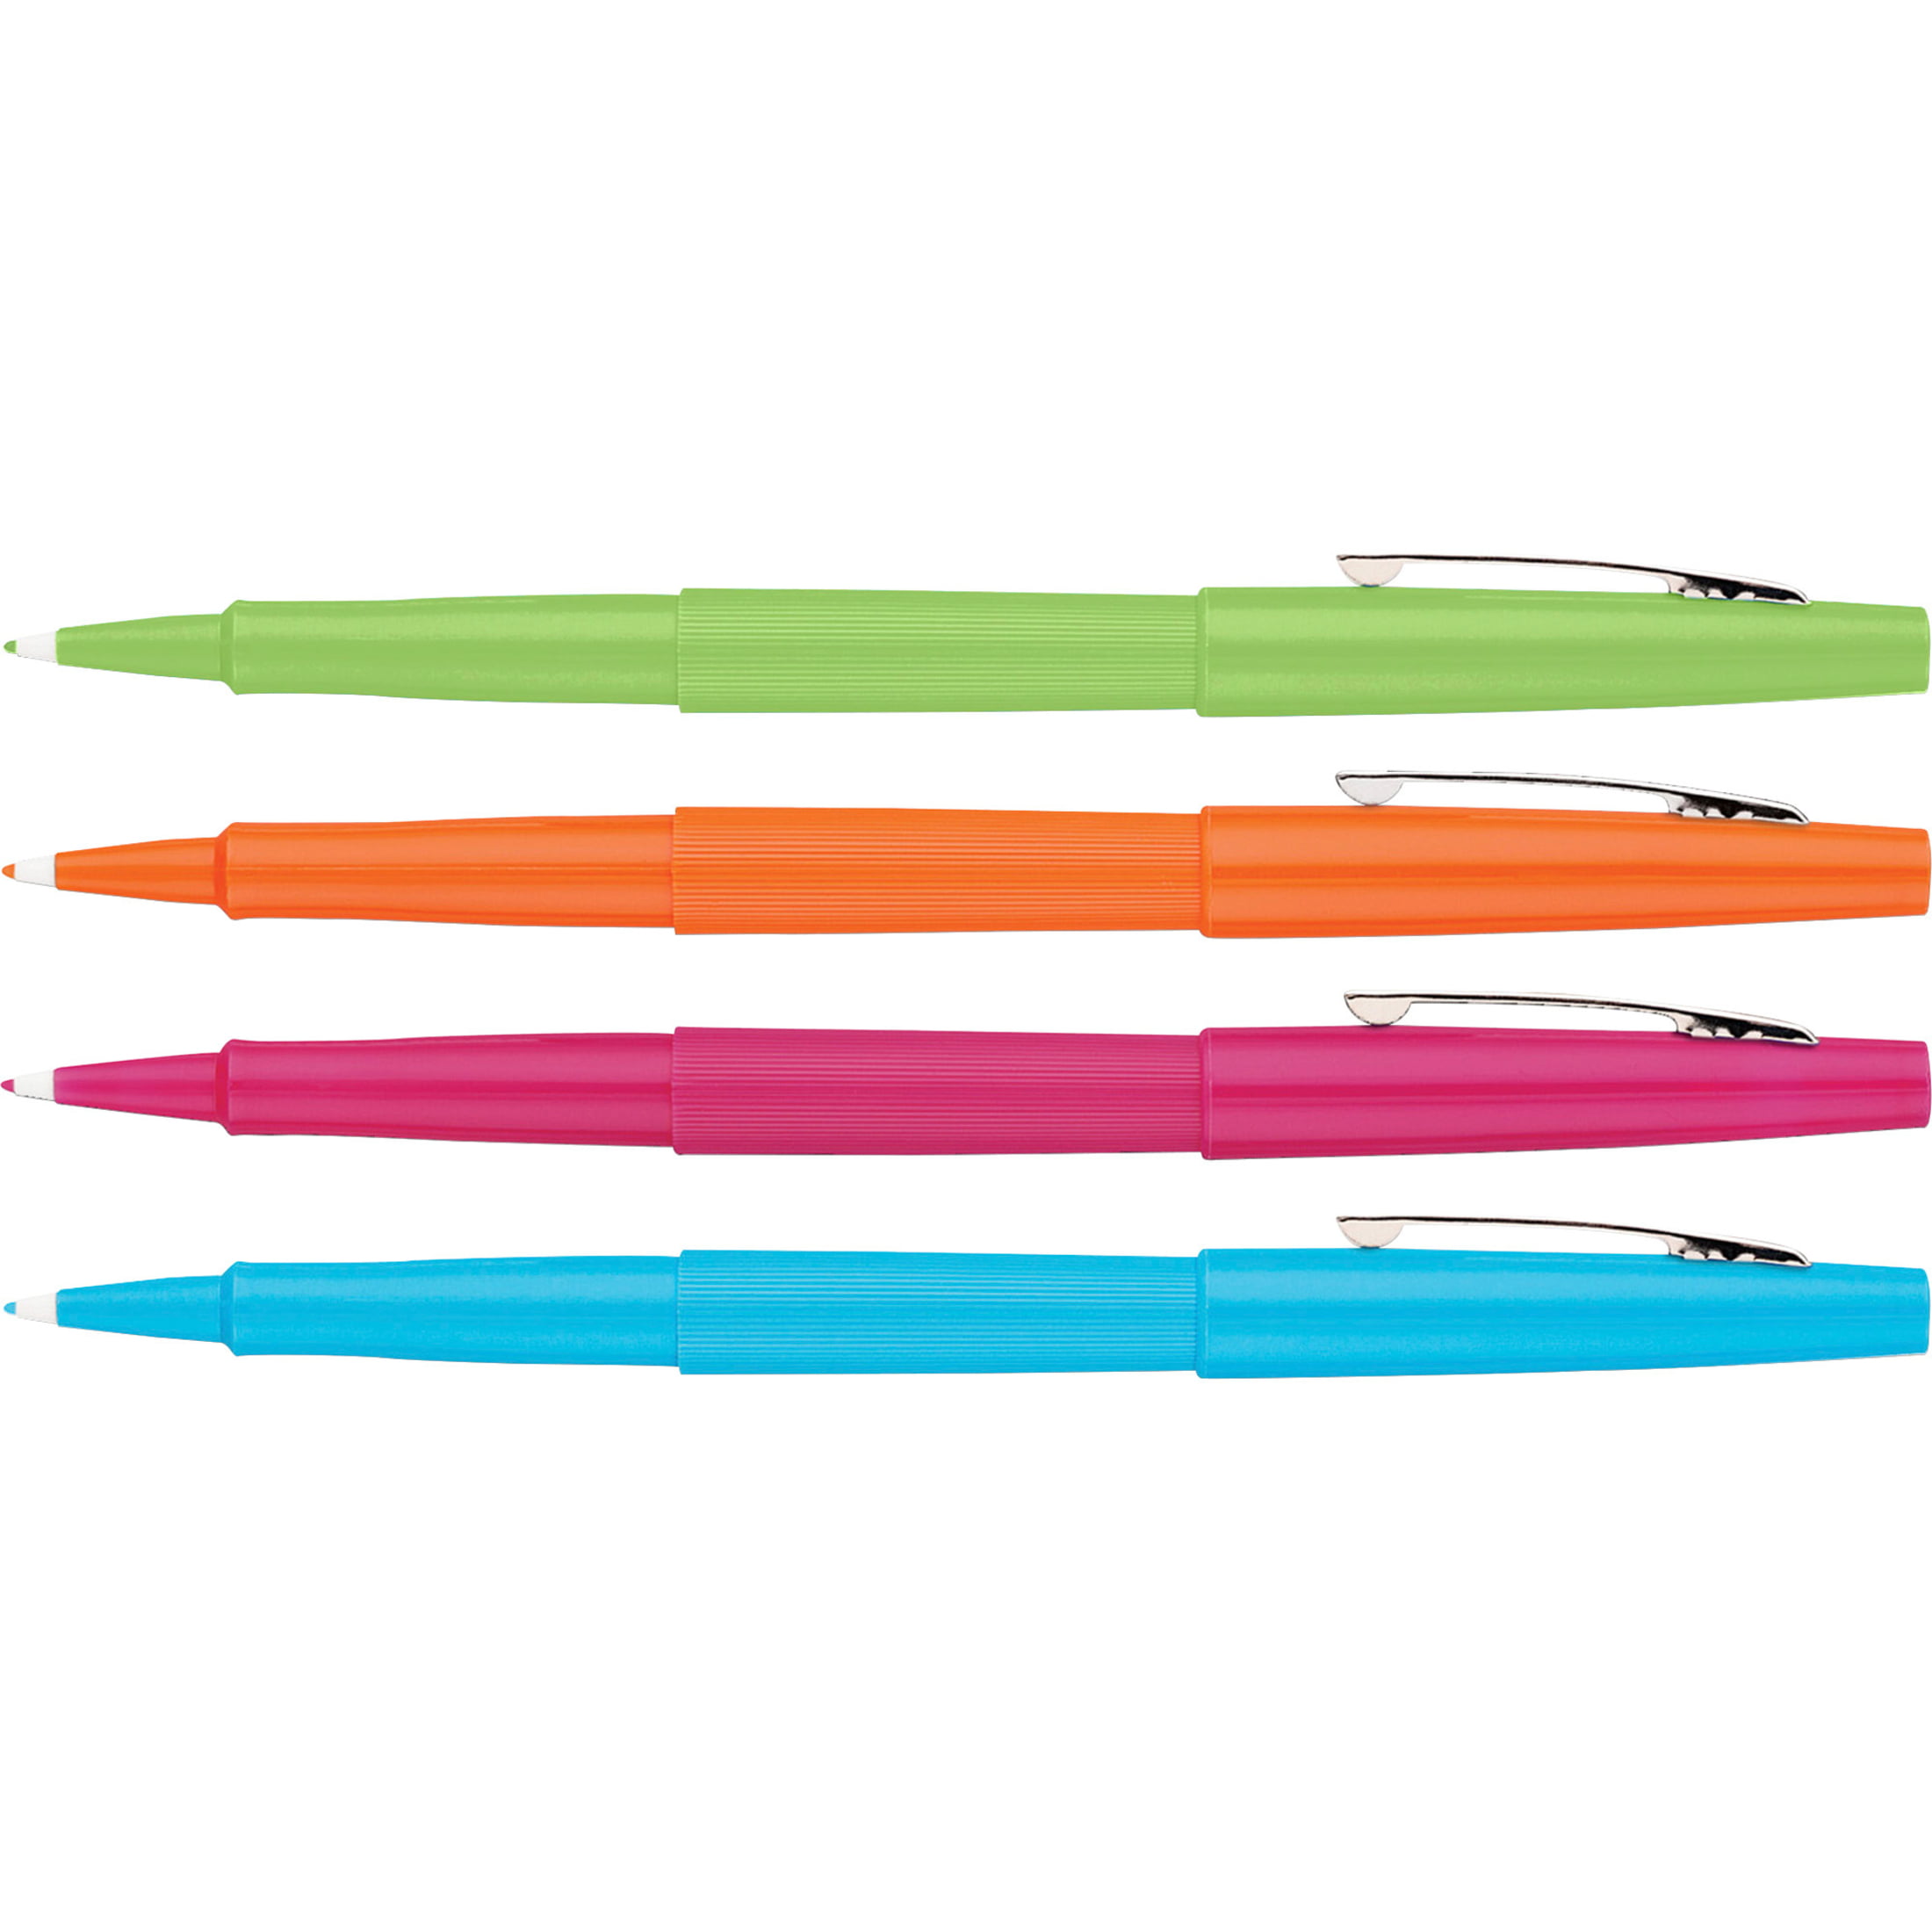 Sanford Papermate® Flair Felt Tip Stick Porous Point Marker Pen